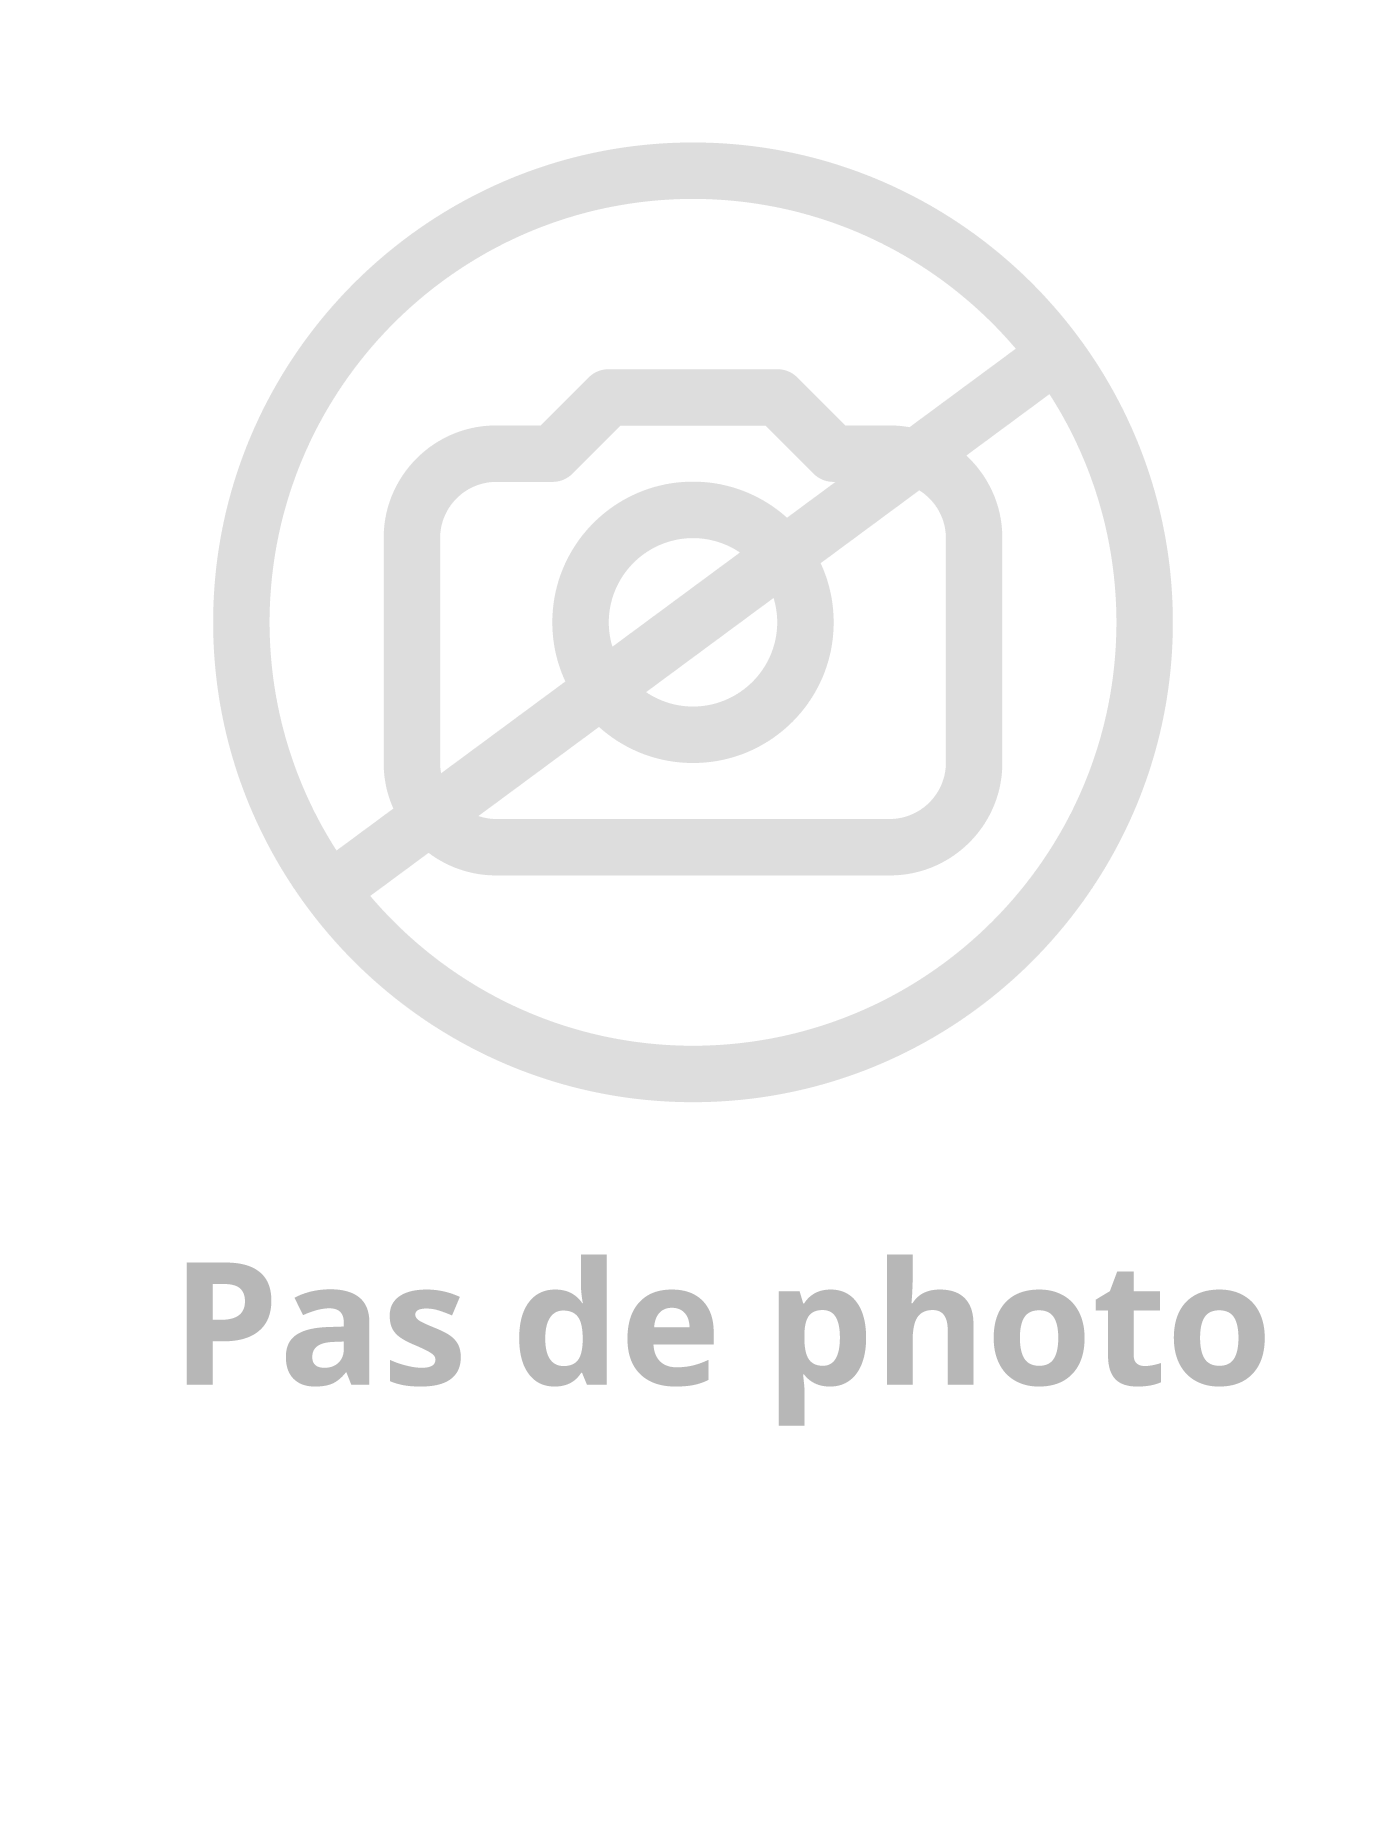 Image du produit MASTIC COLLE MS POLYMÈRES "PARABOND 700" MEGA TACK - BLANC - CARTOUCHE 290ml